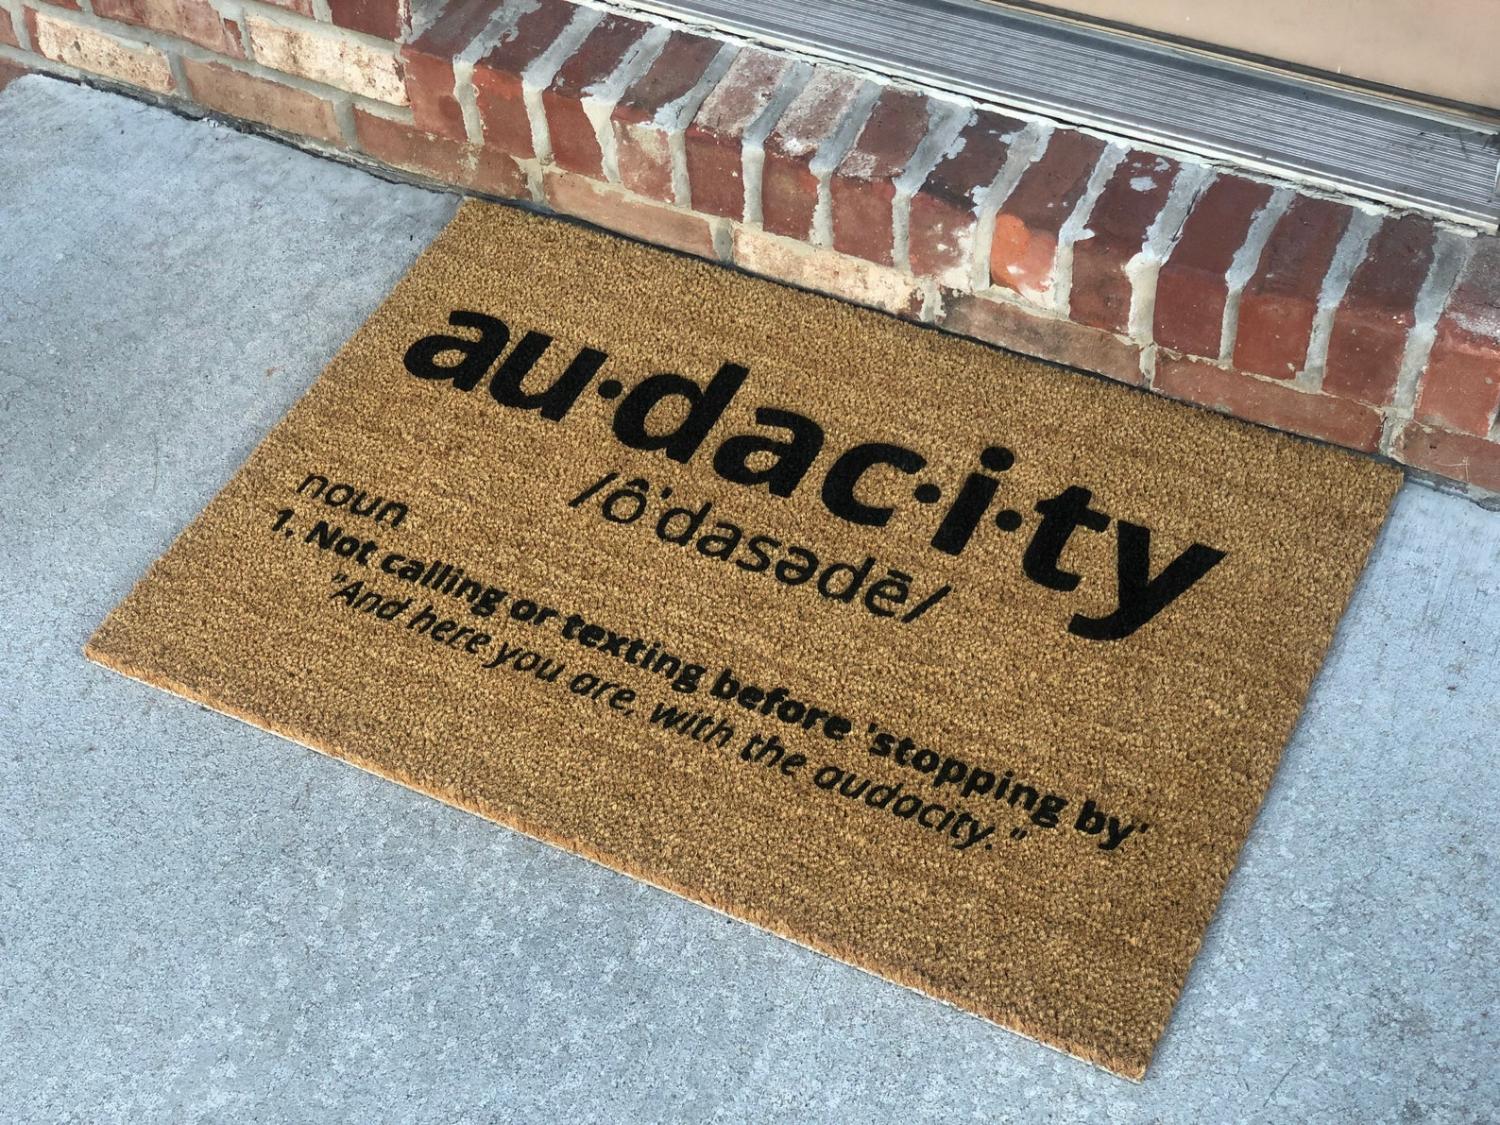 Funny audacity definition doormat